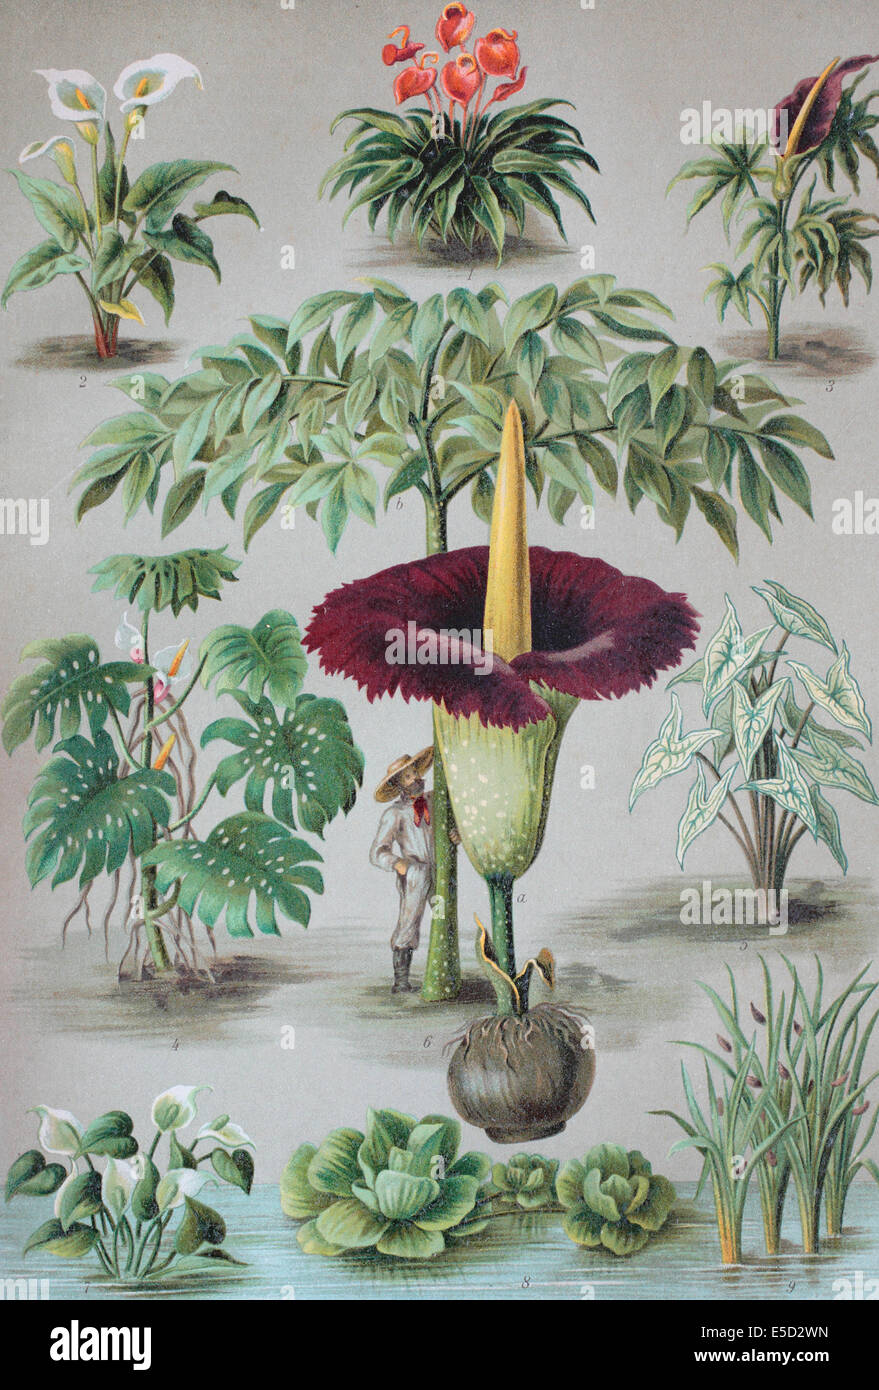 Aronstabgewächse oder Aronstabgewächse, 1. Anthurium, 2. Zantedeschia, 3. Dracunculus, 4. Monstera, 5. Caladium, 6. Amorphophallus, 7. Calla Stockfoto